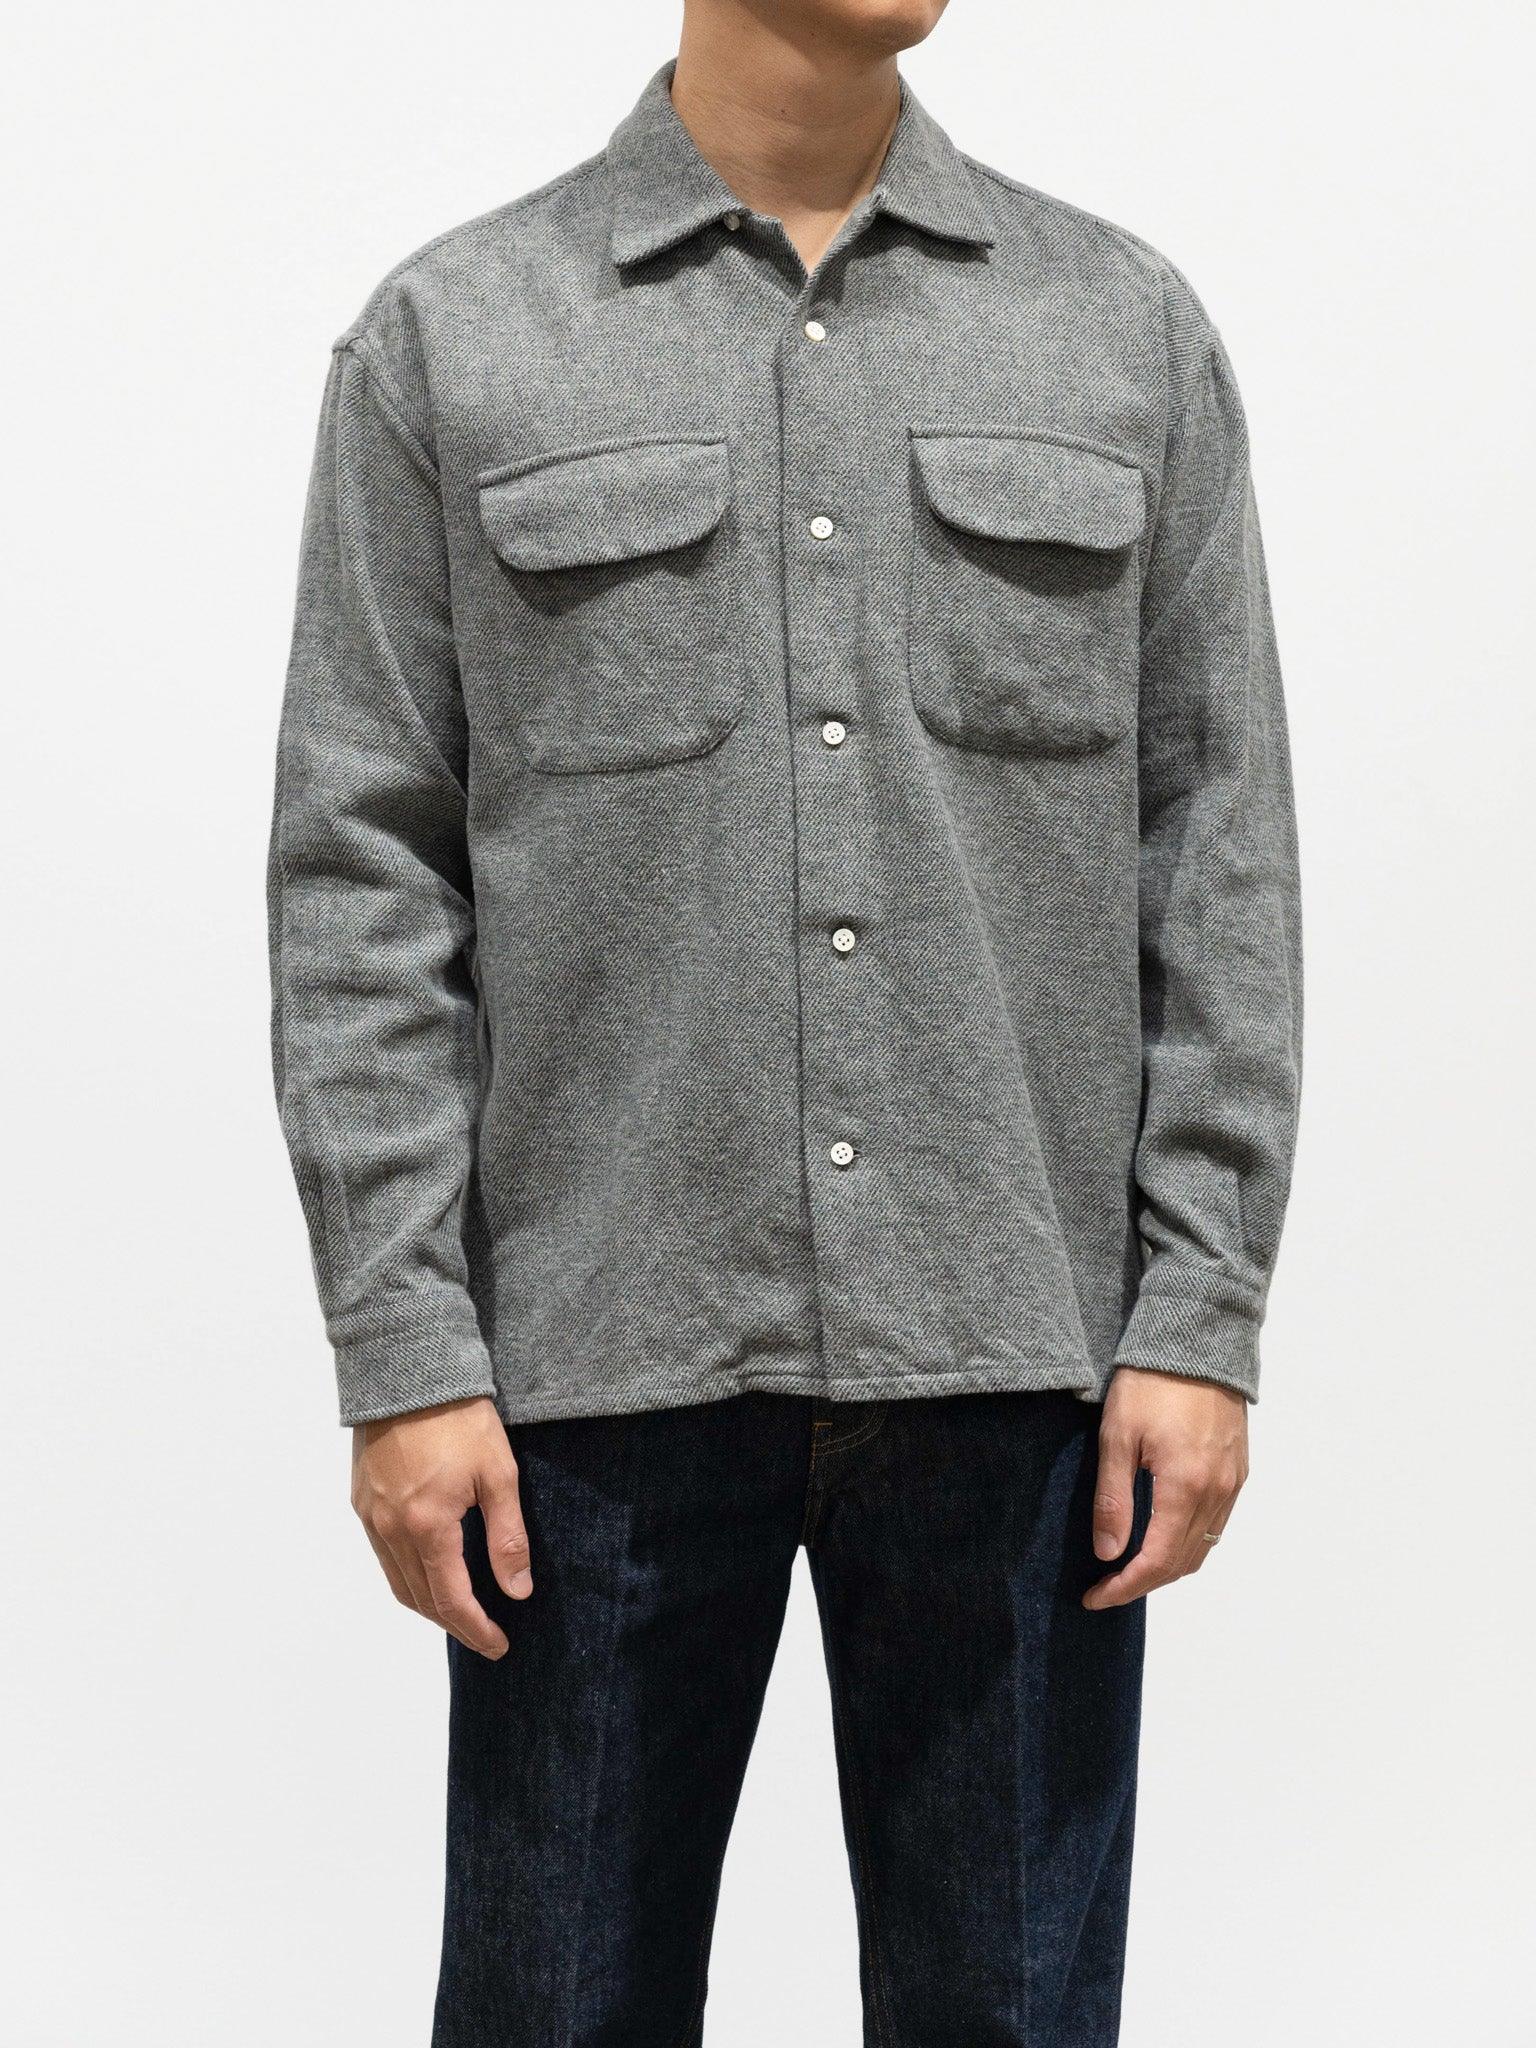 Color Shirt Flap - Namu Shop Pocket ts(s) Mixed Round Cotton - Gray Baggy